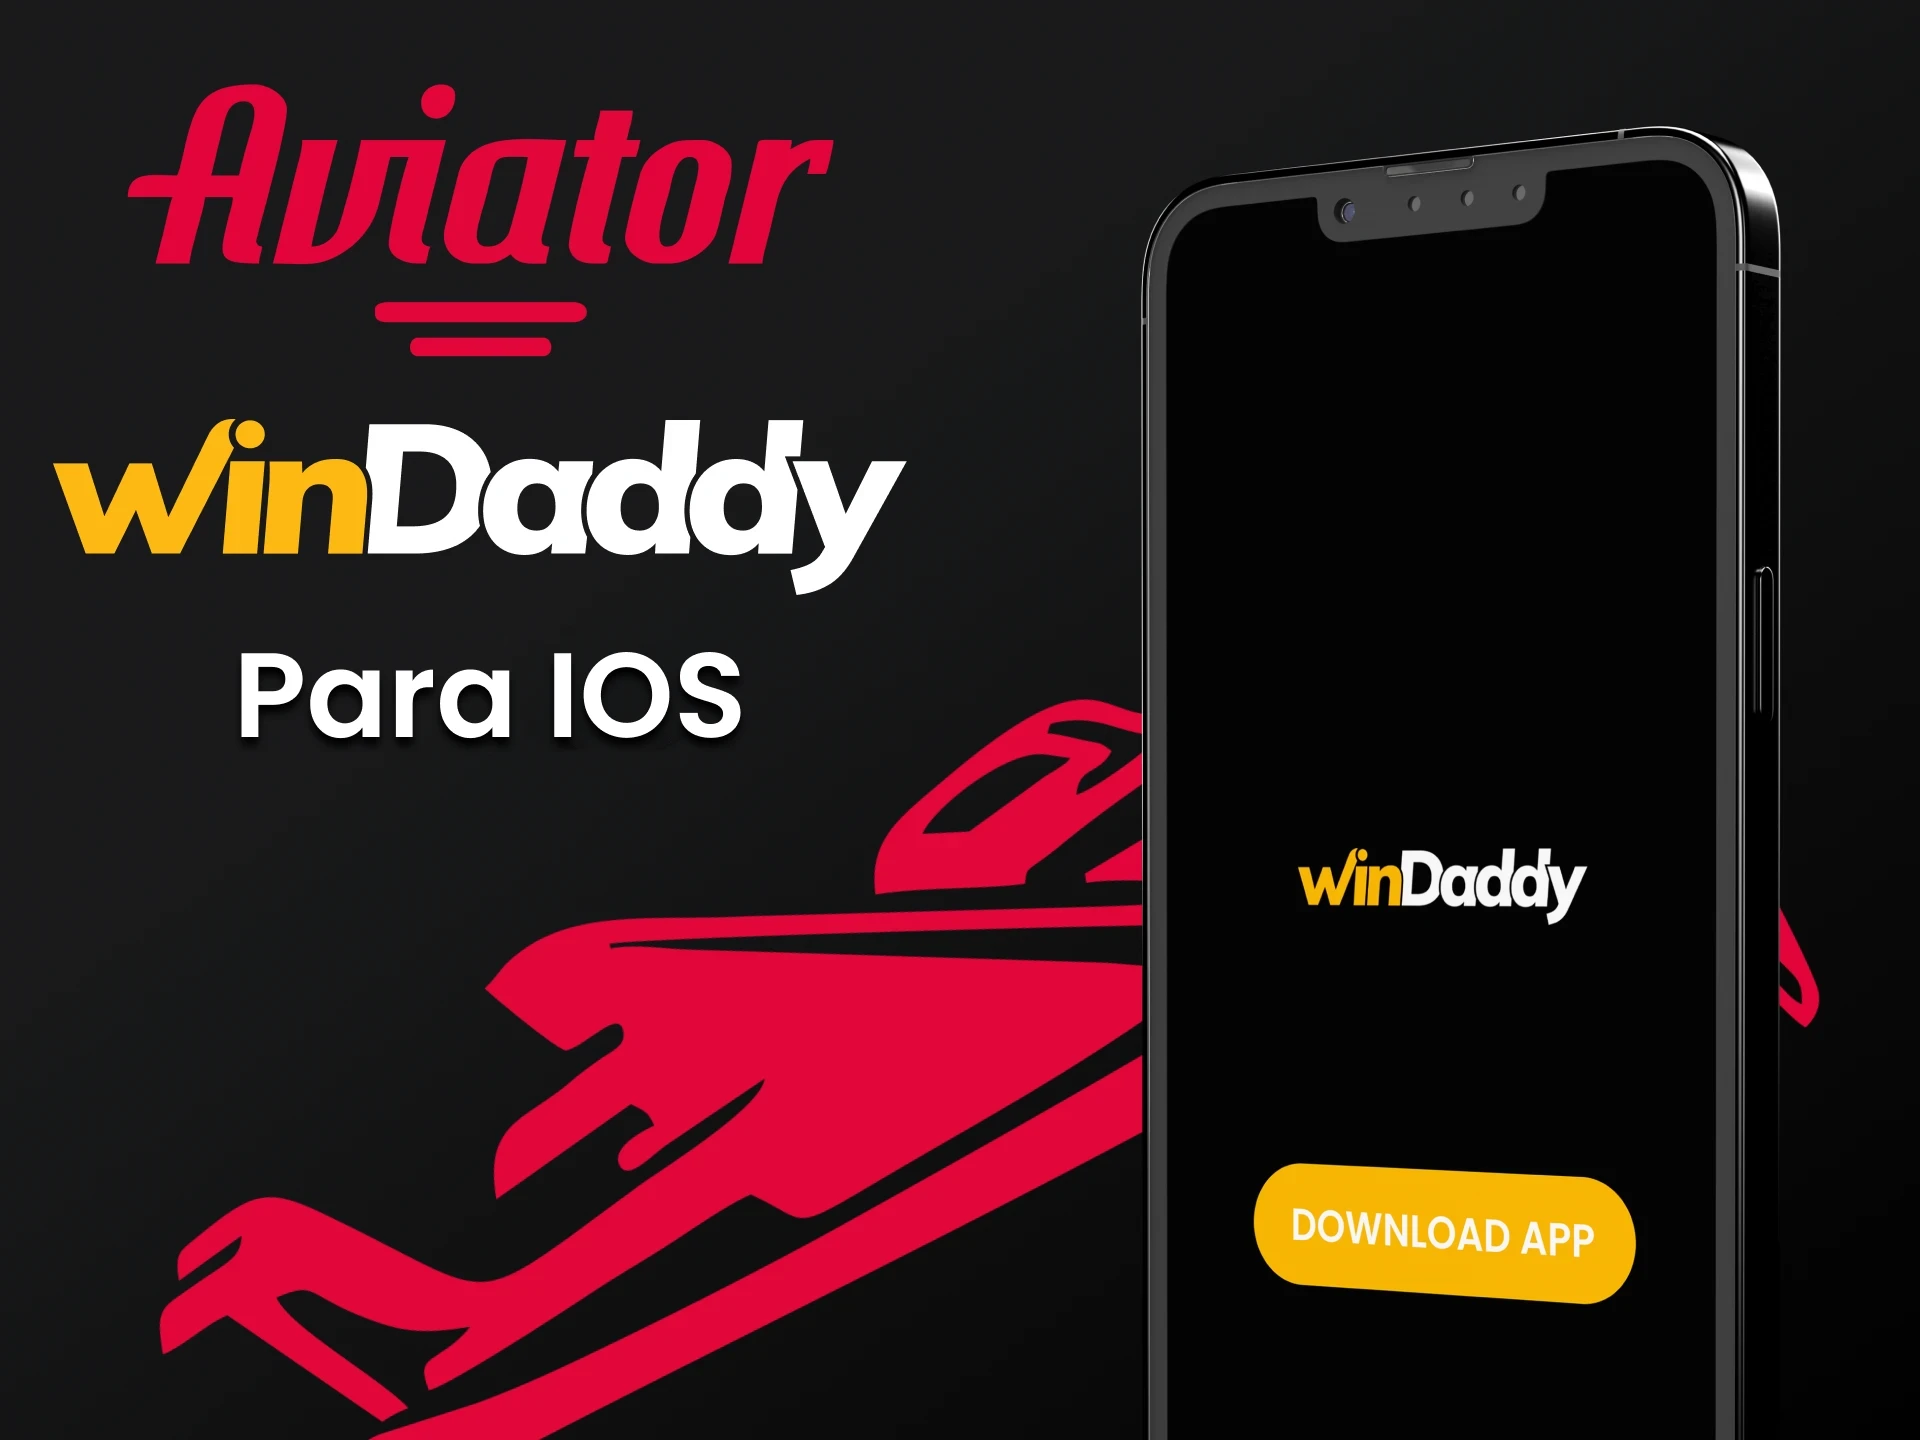 Baixe o aplicativo WinDaddy para iOS para jogar Aviator.